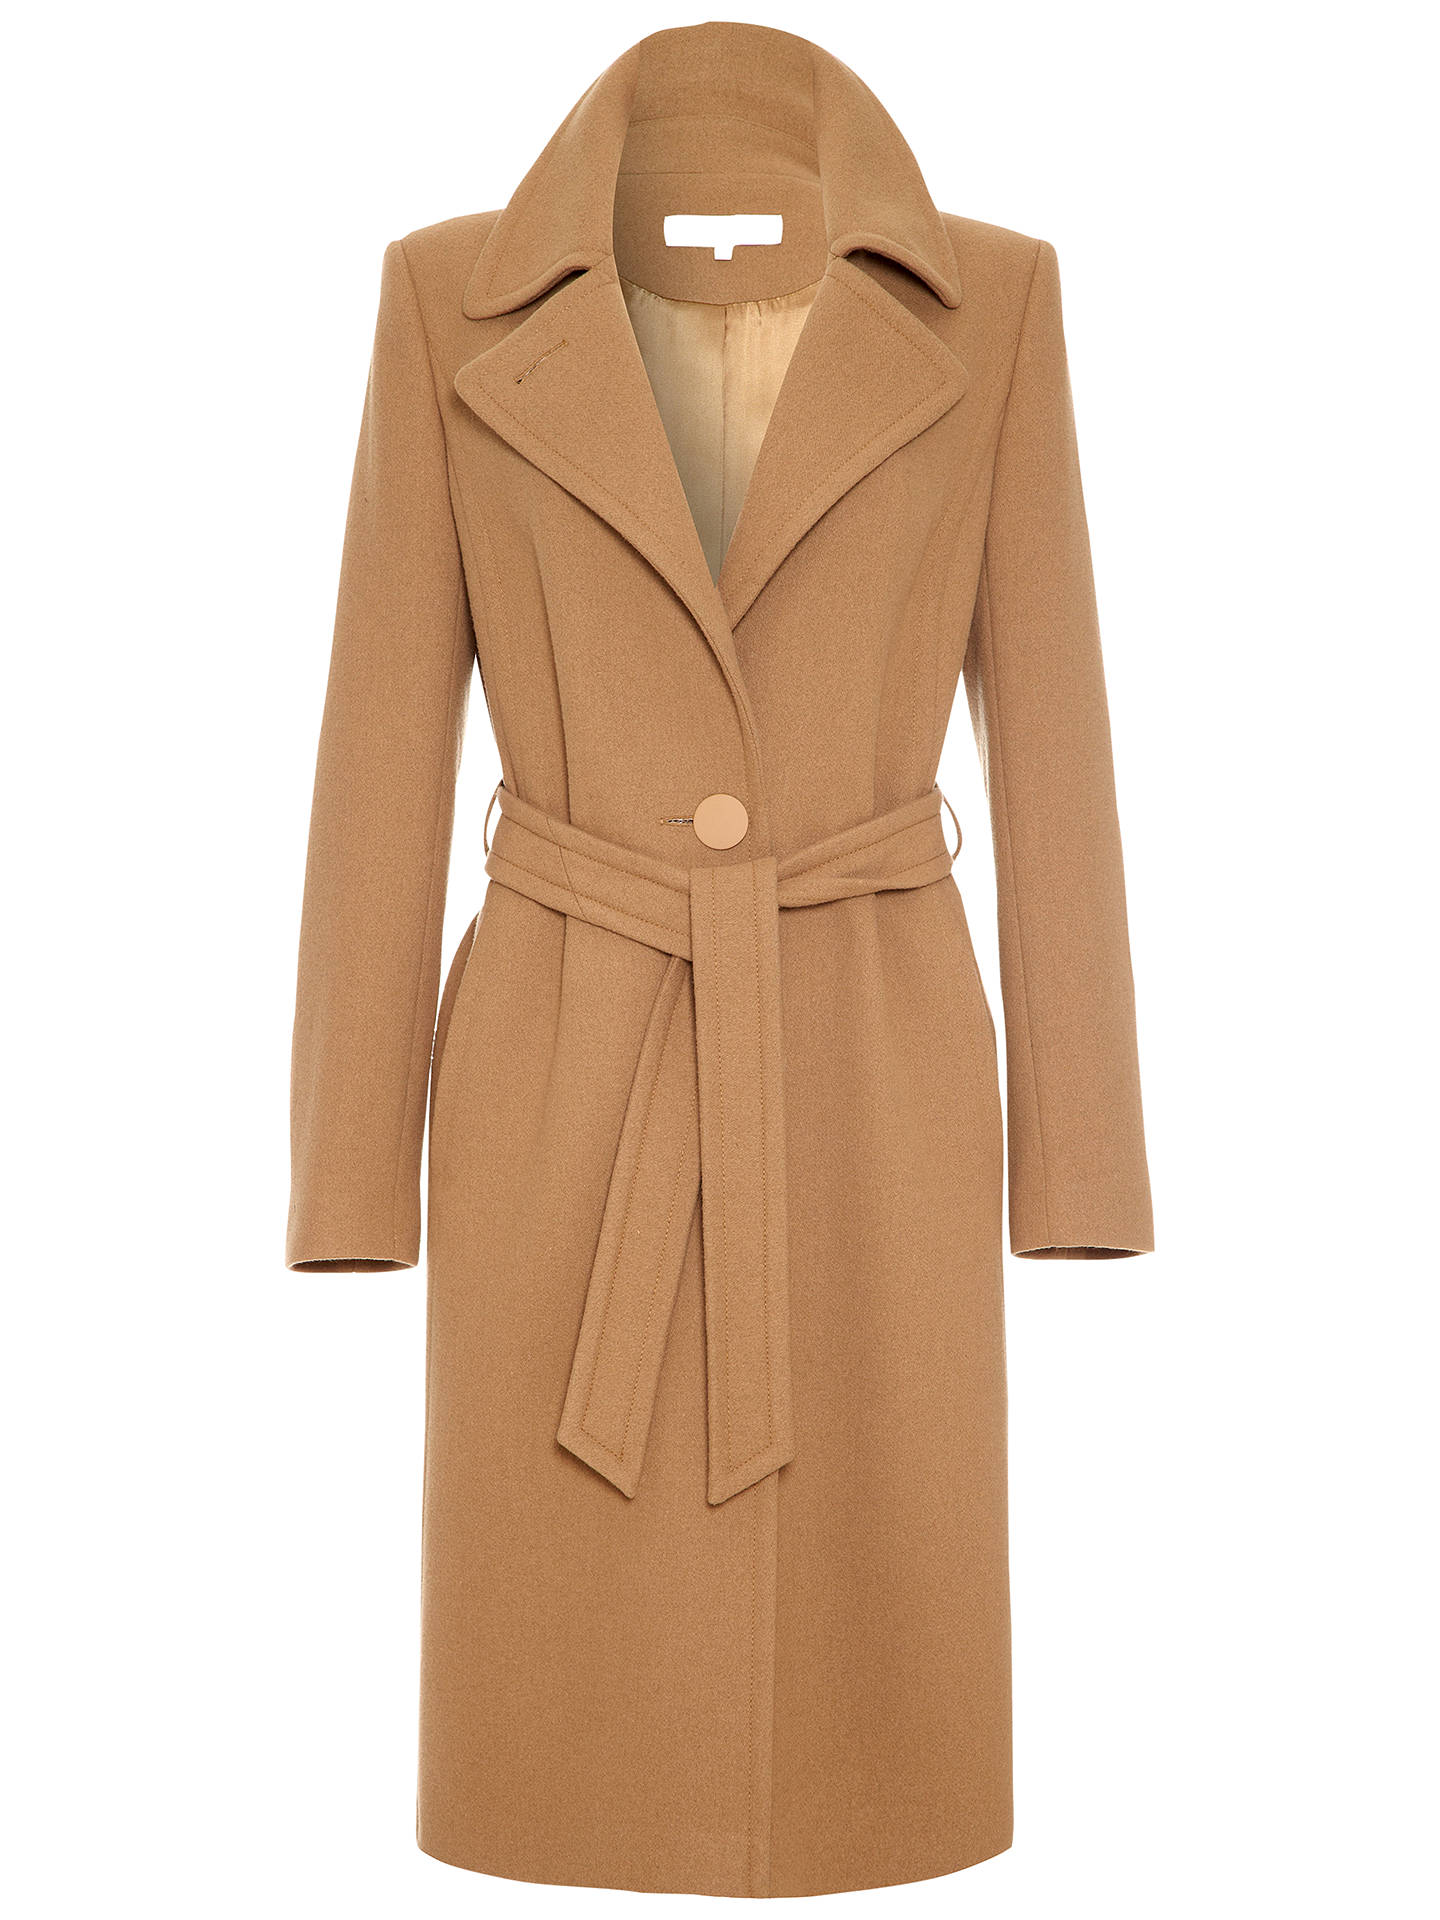 Damsel in a dress Belton Coat at John Lewis & Partners